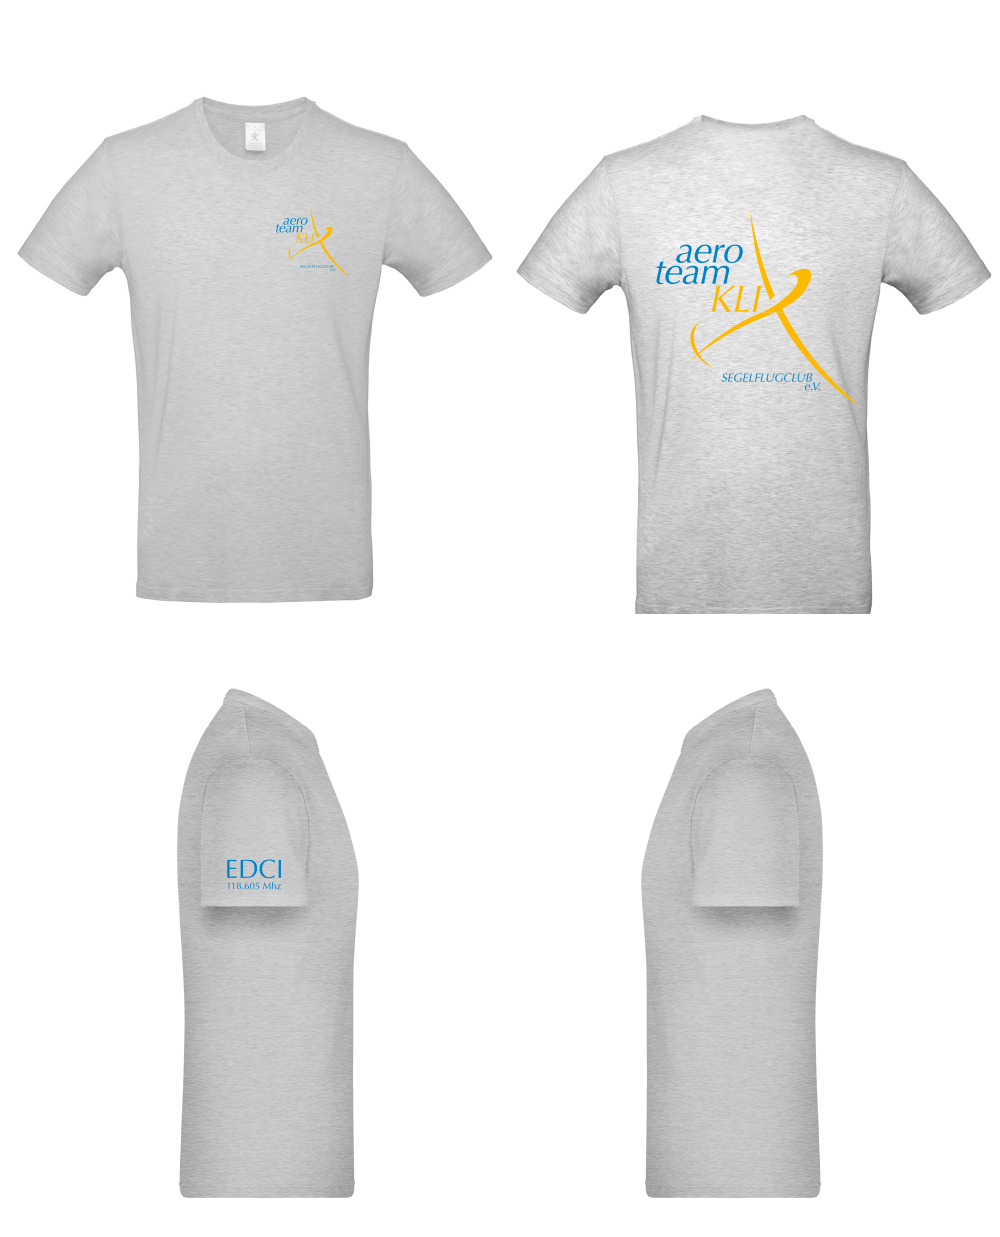 Herren T-Shirt Aeroteam Klix